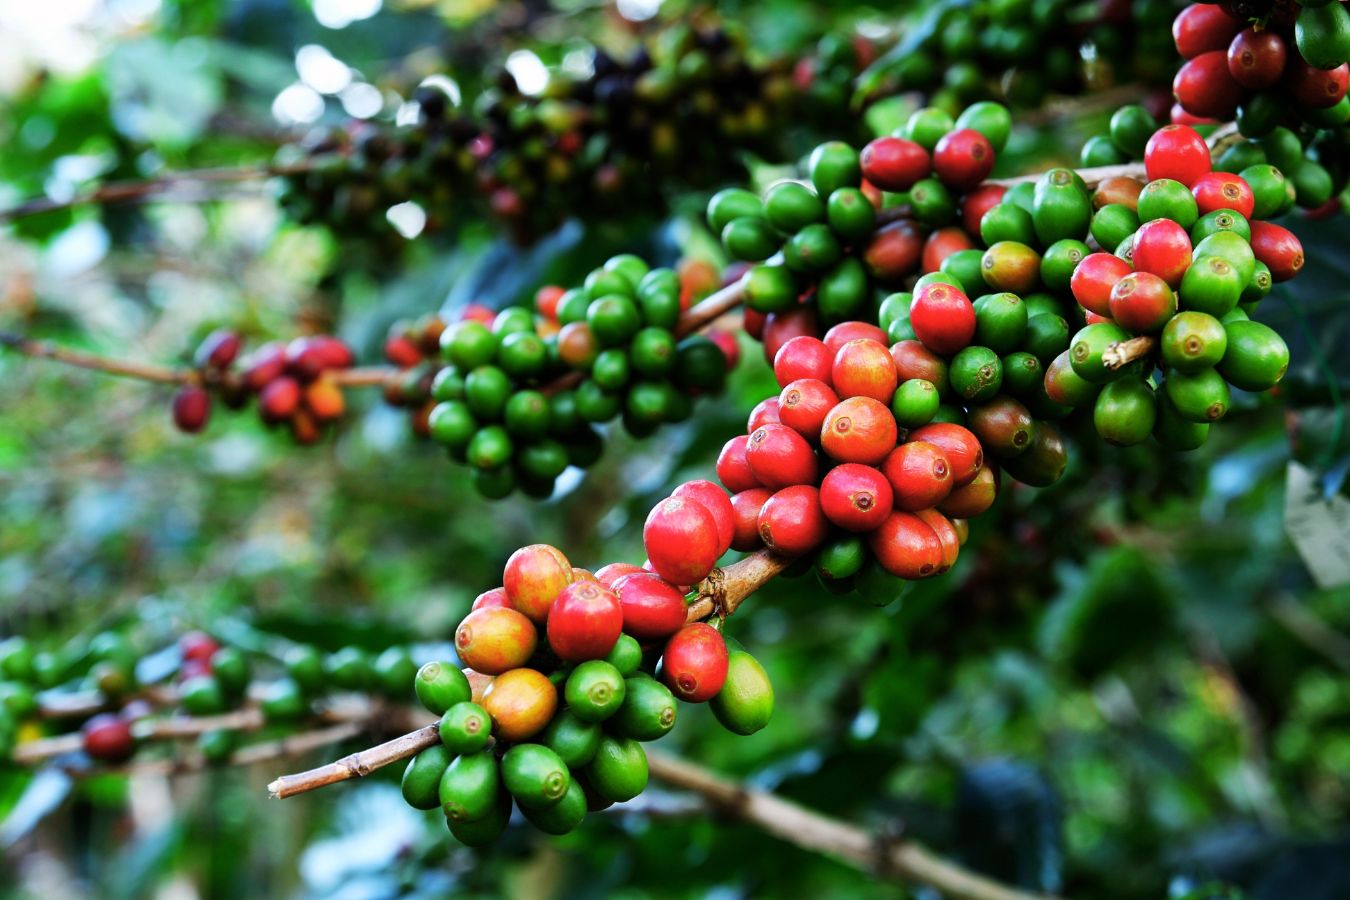 What Is Moka Coffee - Characteristics Of Moka Coffee